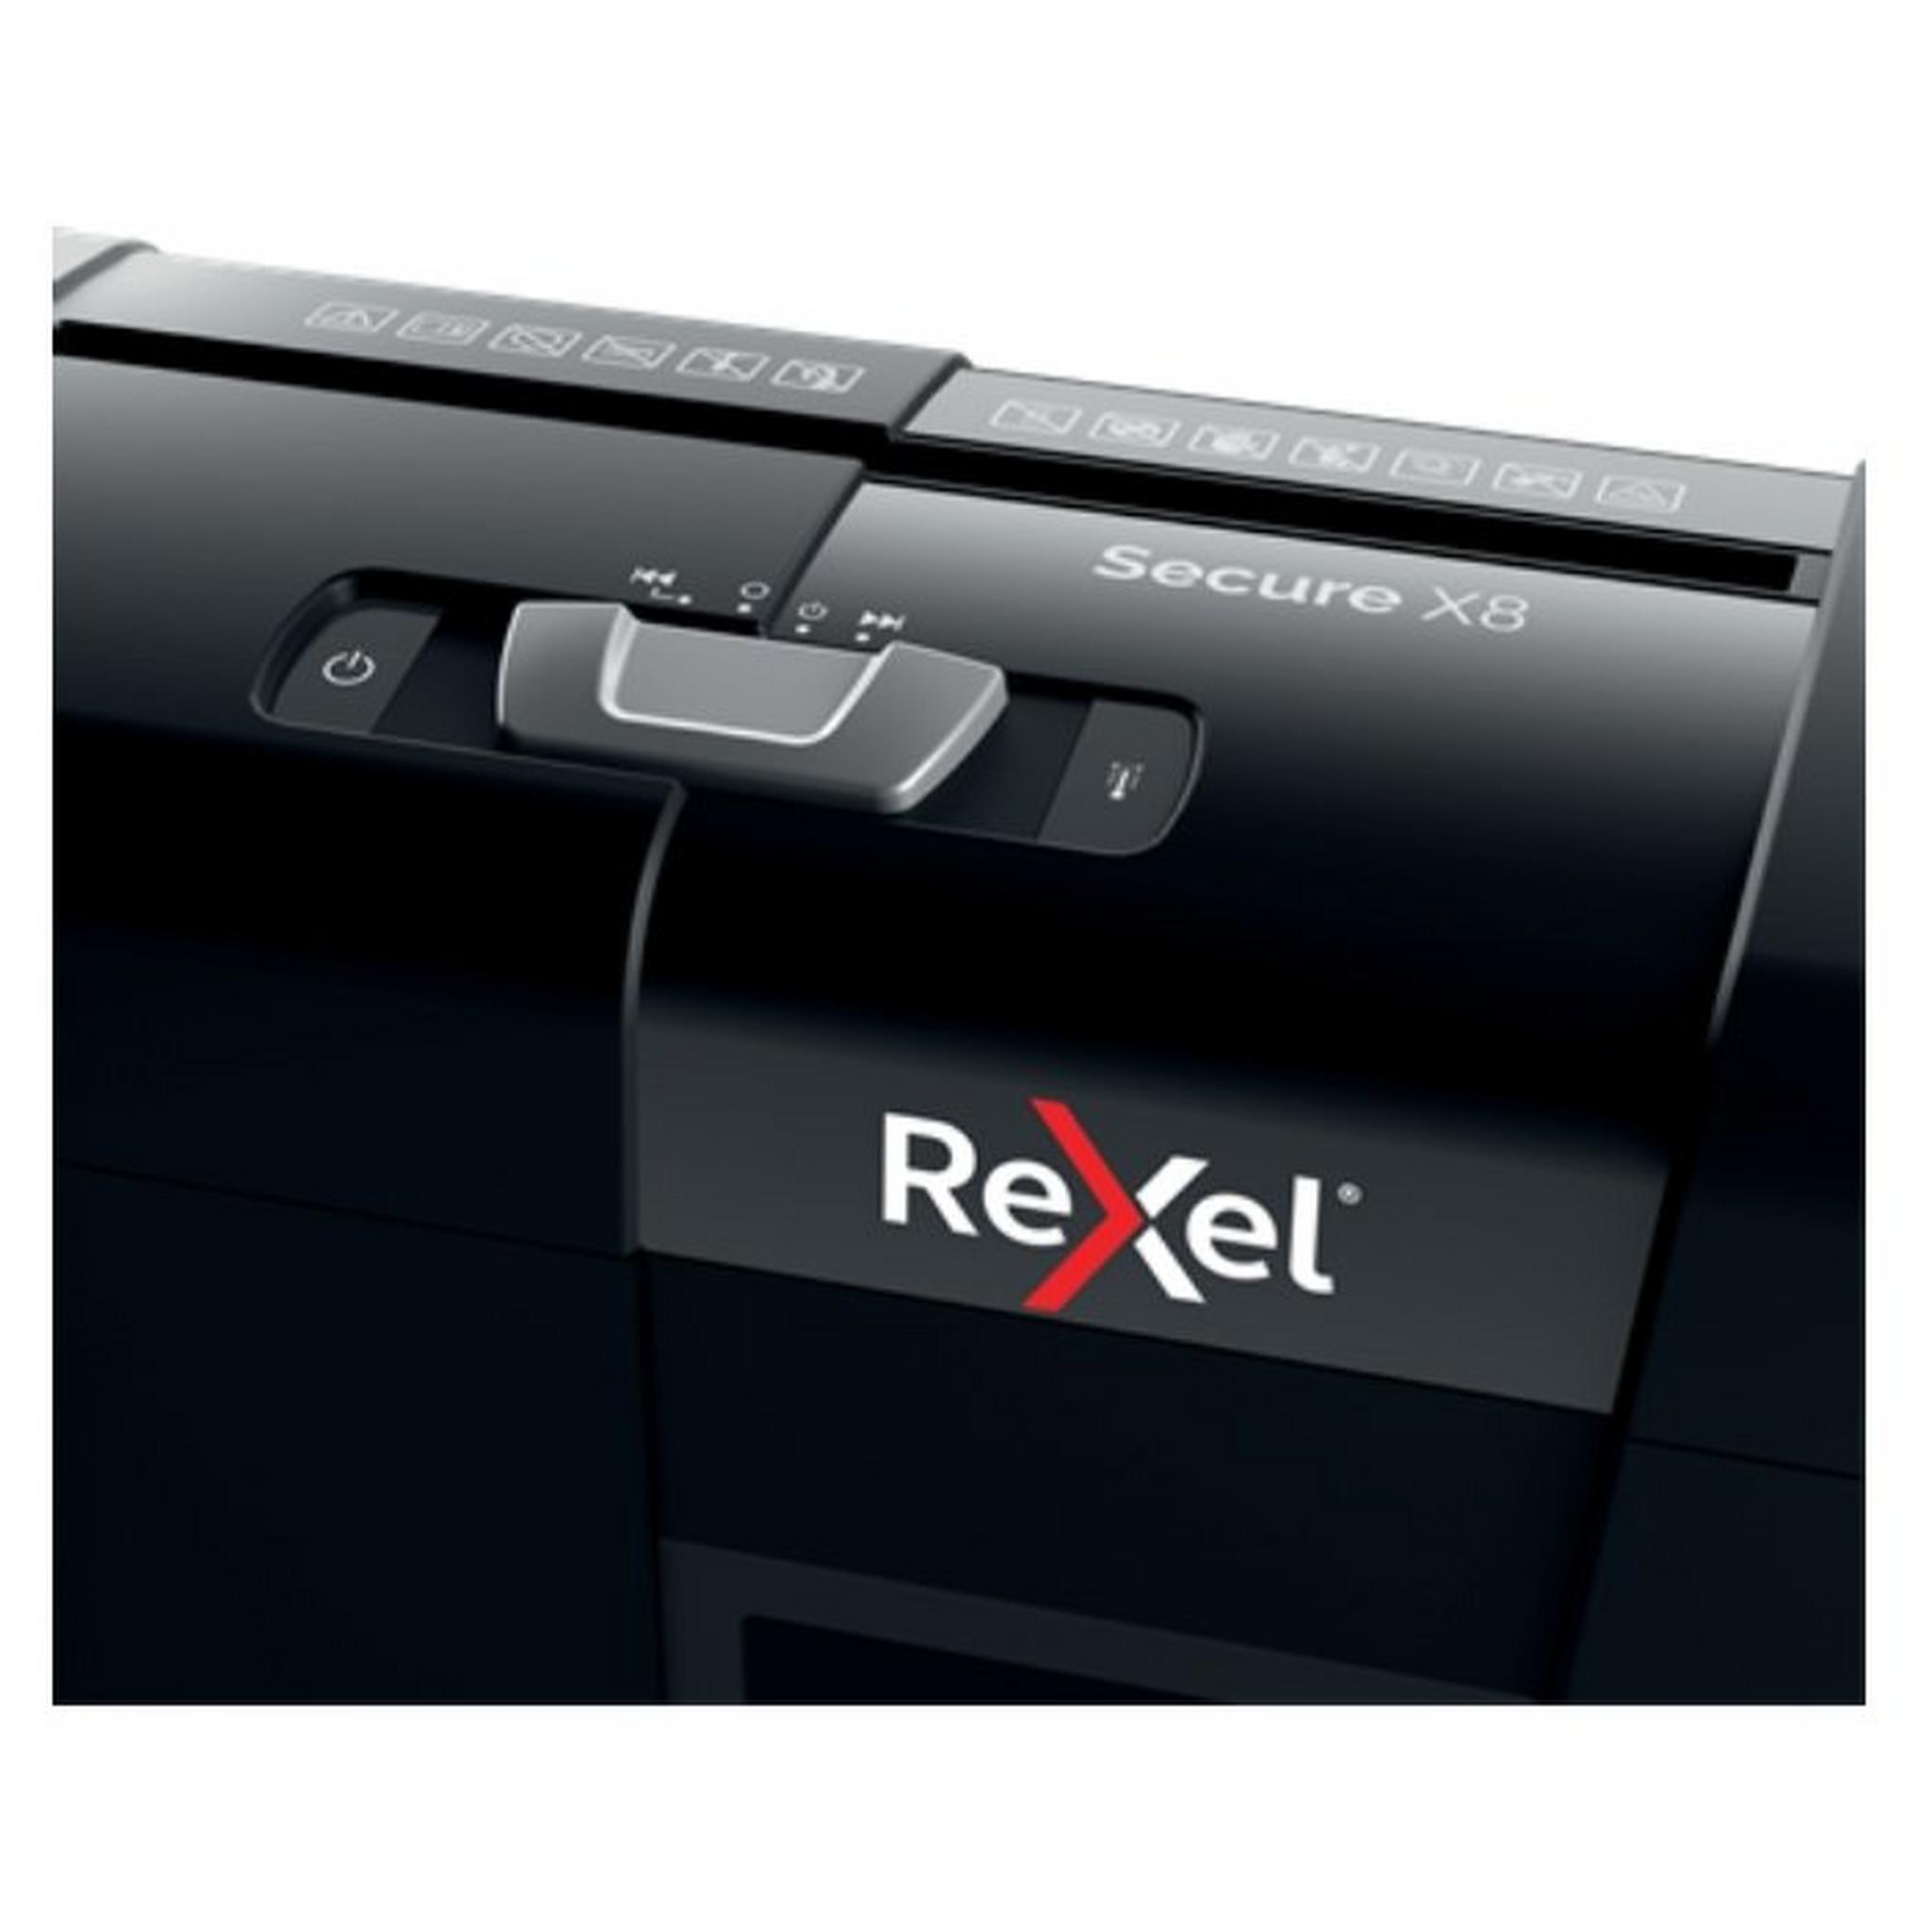 Rexel Secure X8 Cross Cut Paper Shredder